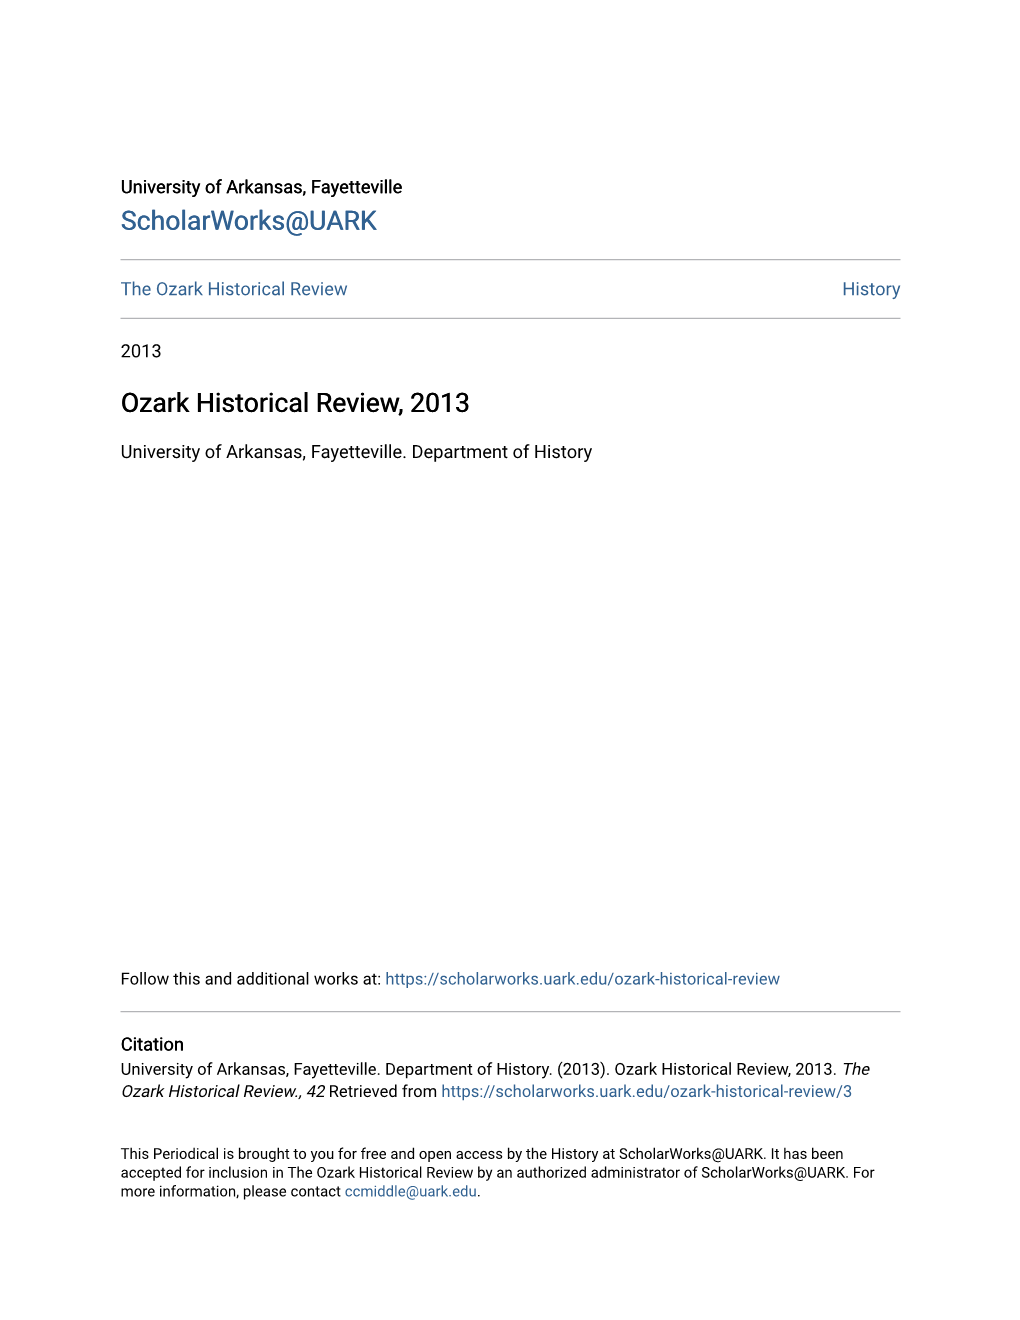 Ozark Historical Review, 2013